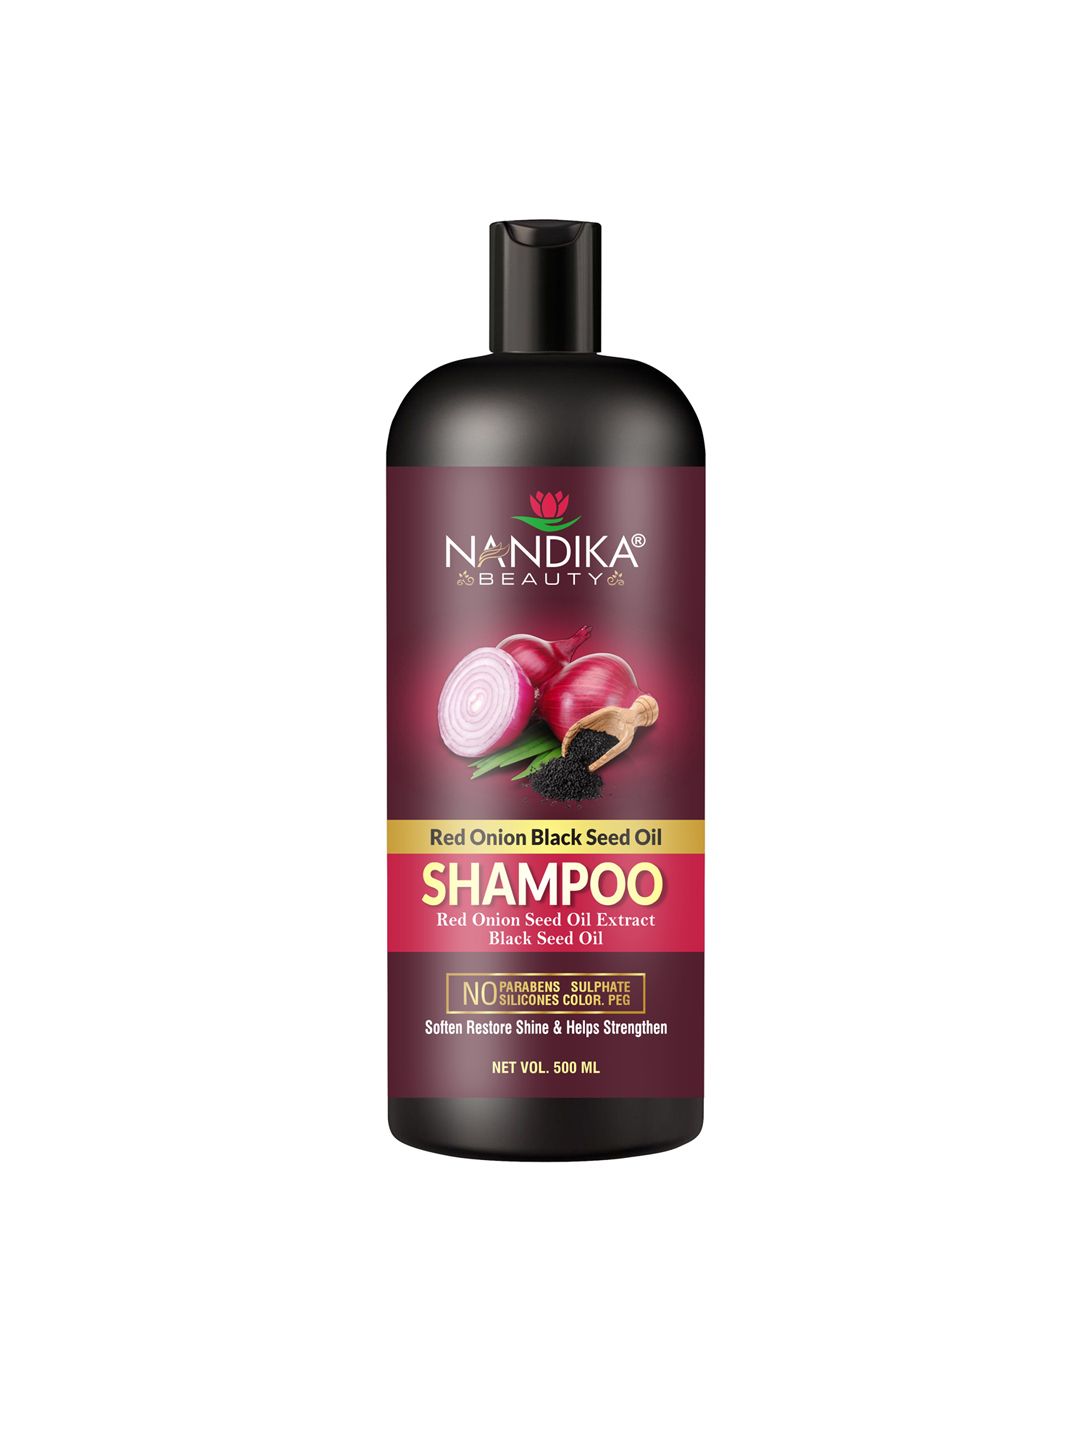 NANDIKA BEAUTY Red Onion Black Seed Oil Shampoo 500 ml Price in India